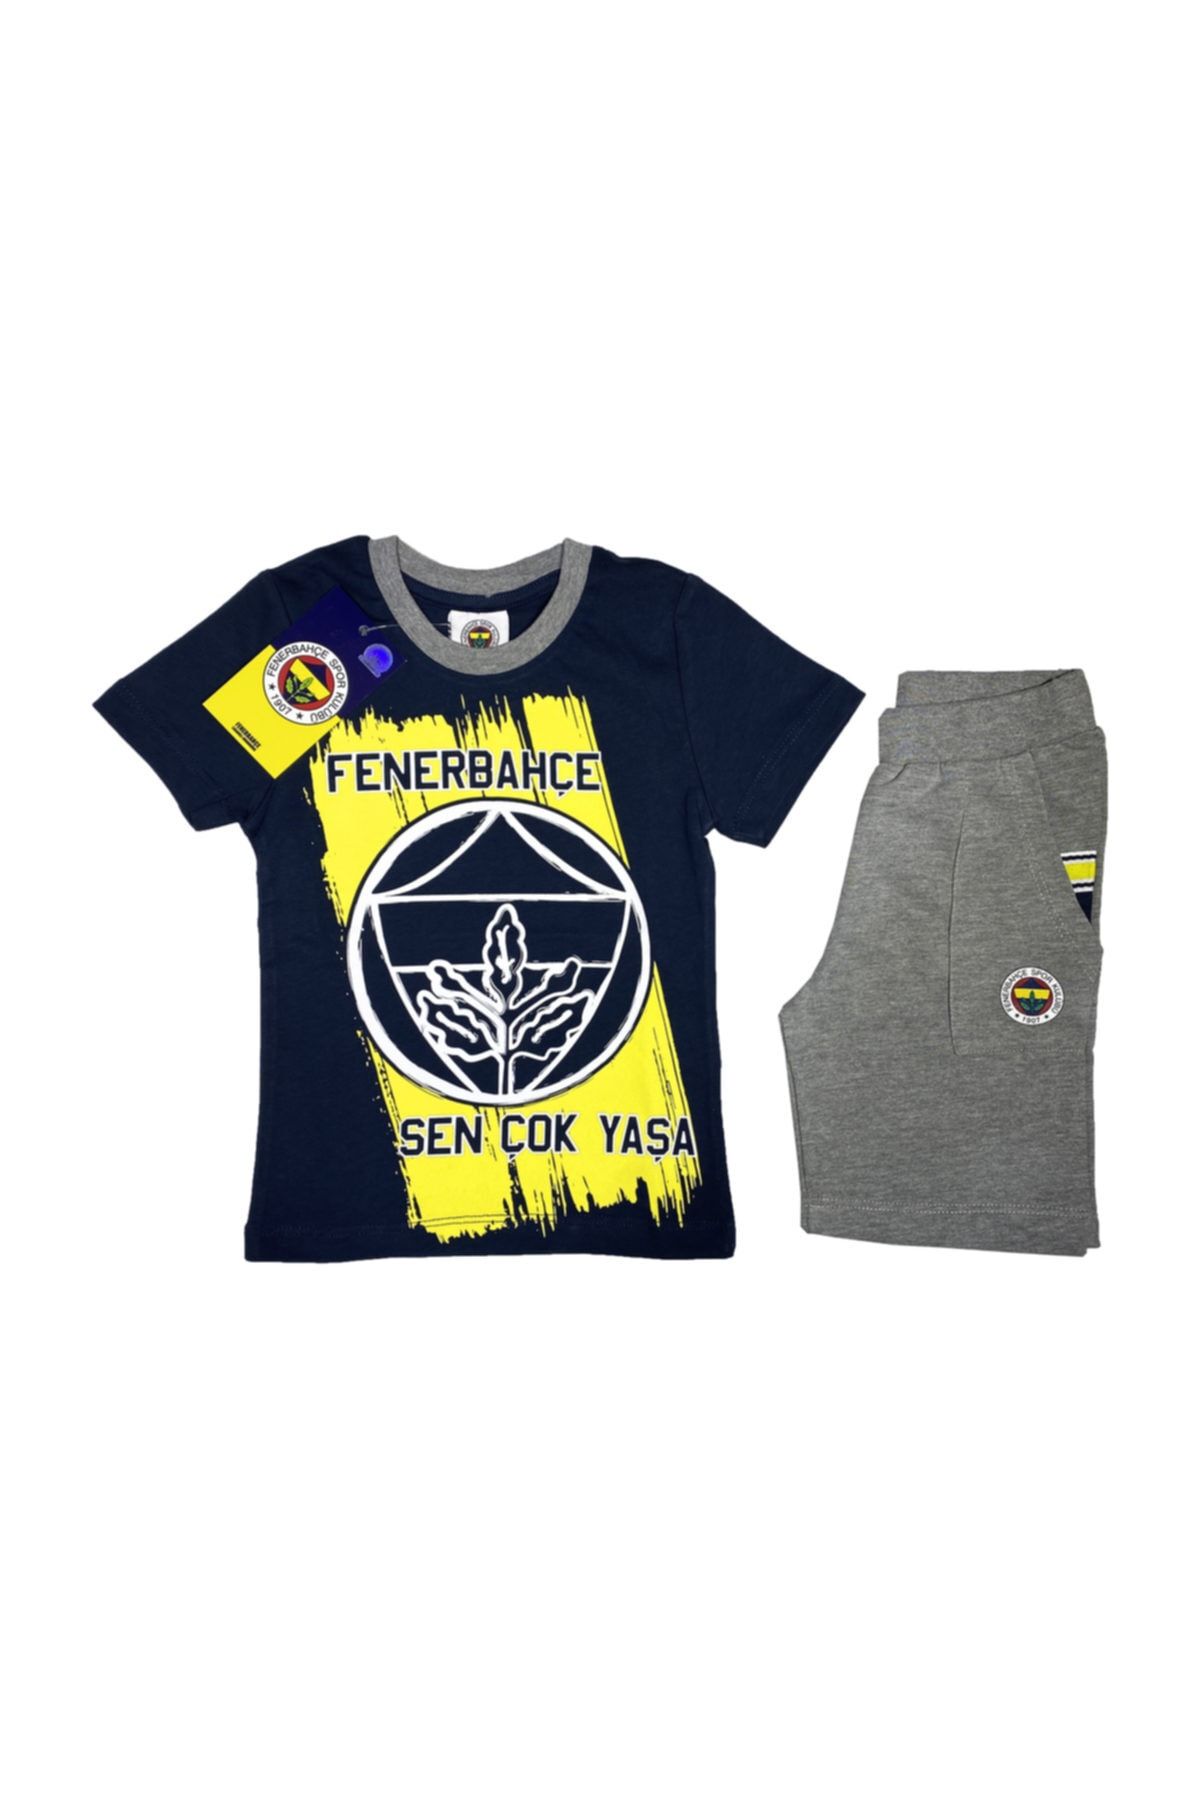 Fenerbahçe Fenerbahçe T-shirt Takım